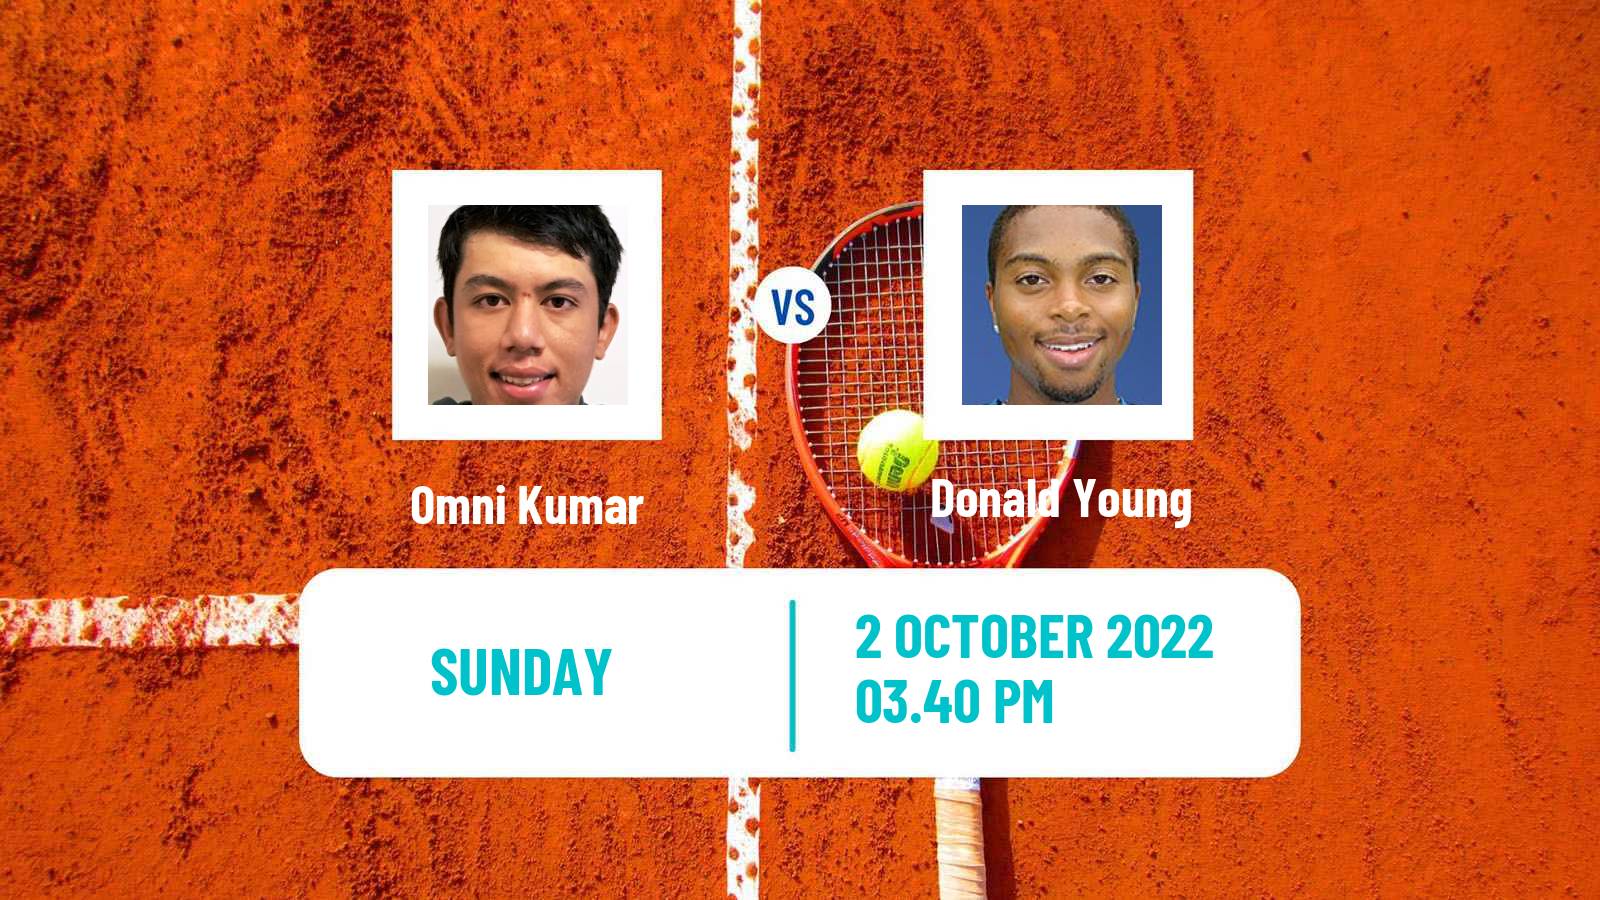 Tennis ATP Challenger Omni Kumar - Donald Young